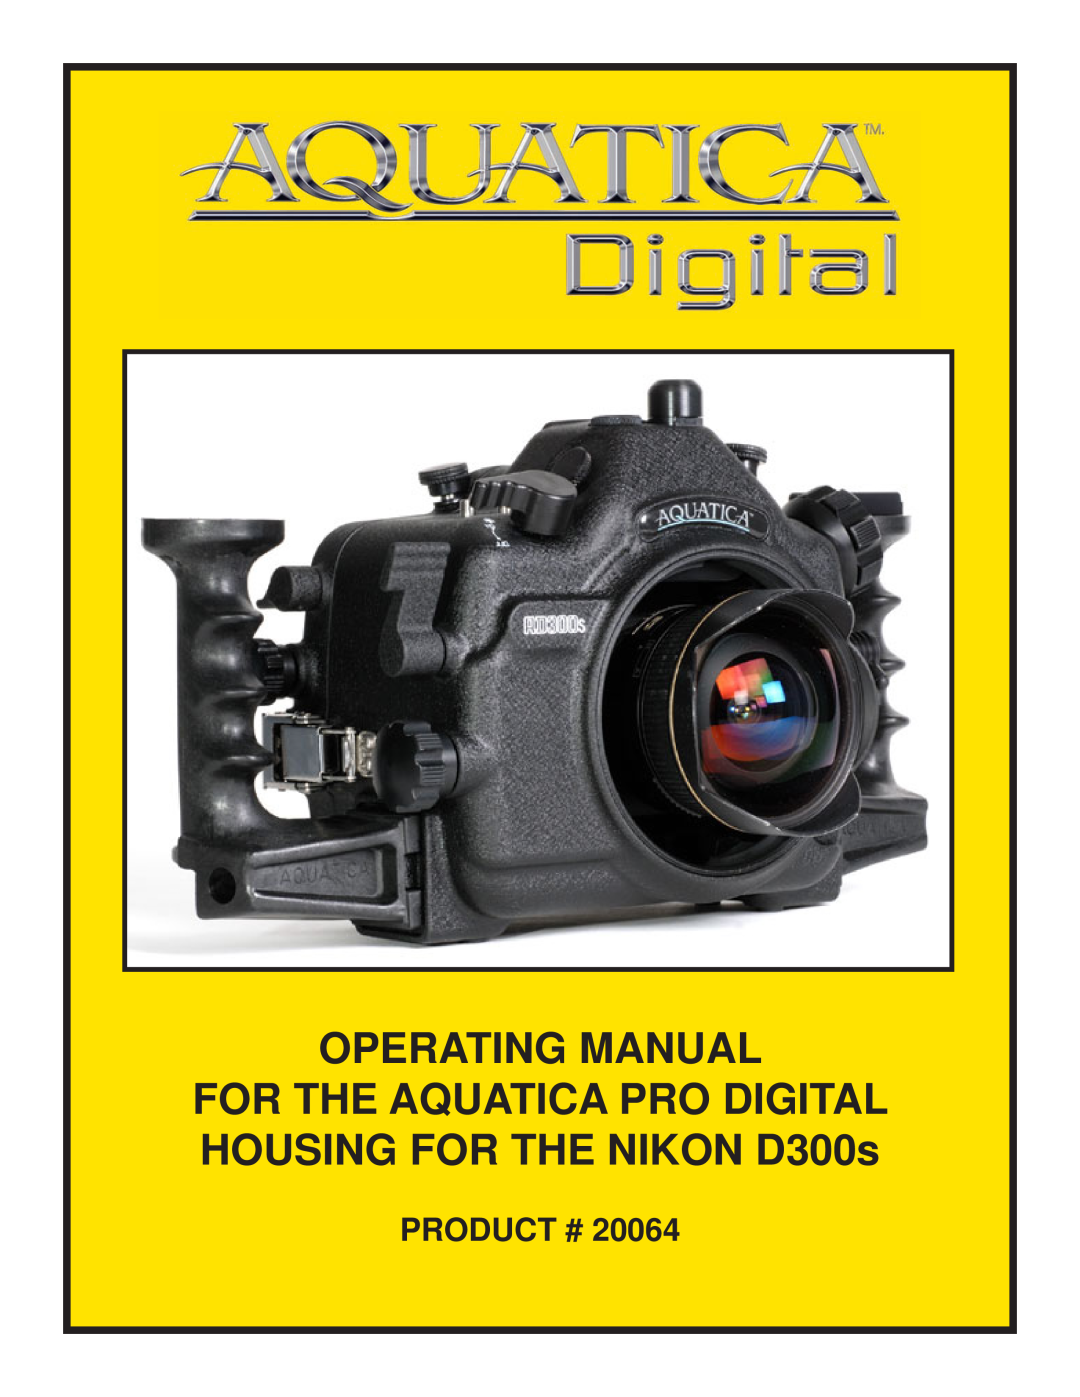 Nikon manual Product #, Operating Manual, FOR THE AQUATICA PRO DIGITAL HOUSING FOR THE NIKON D300s 